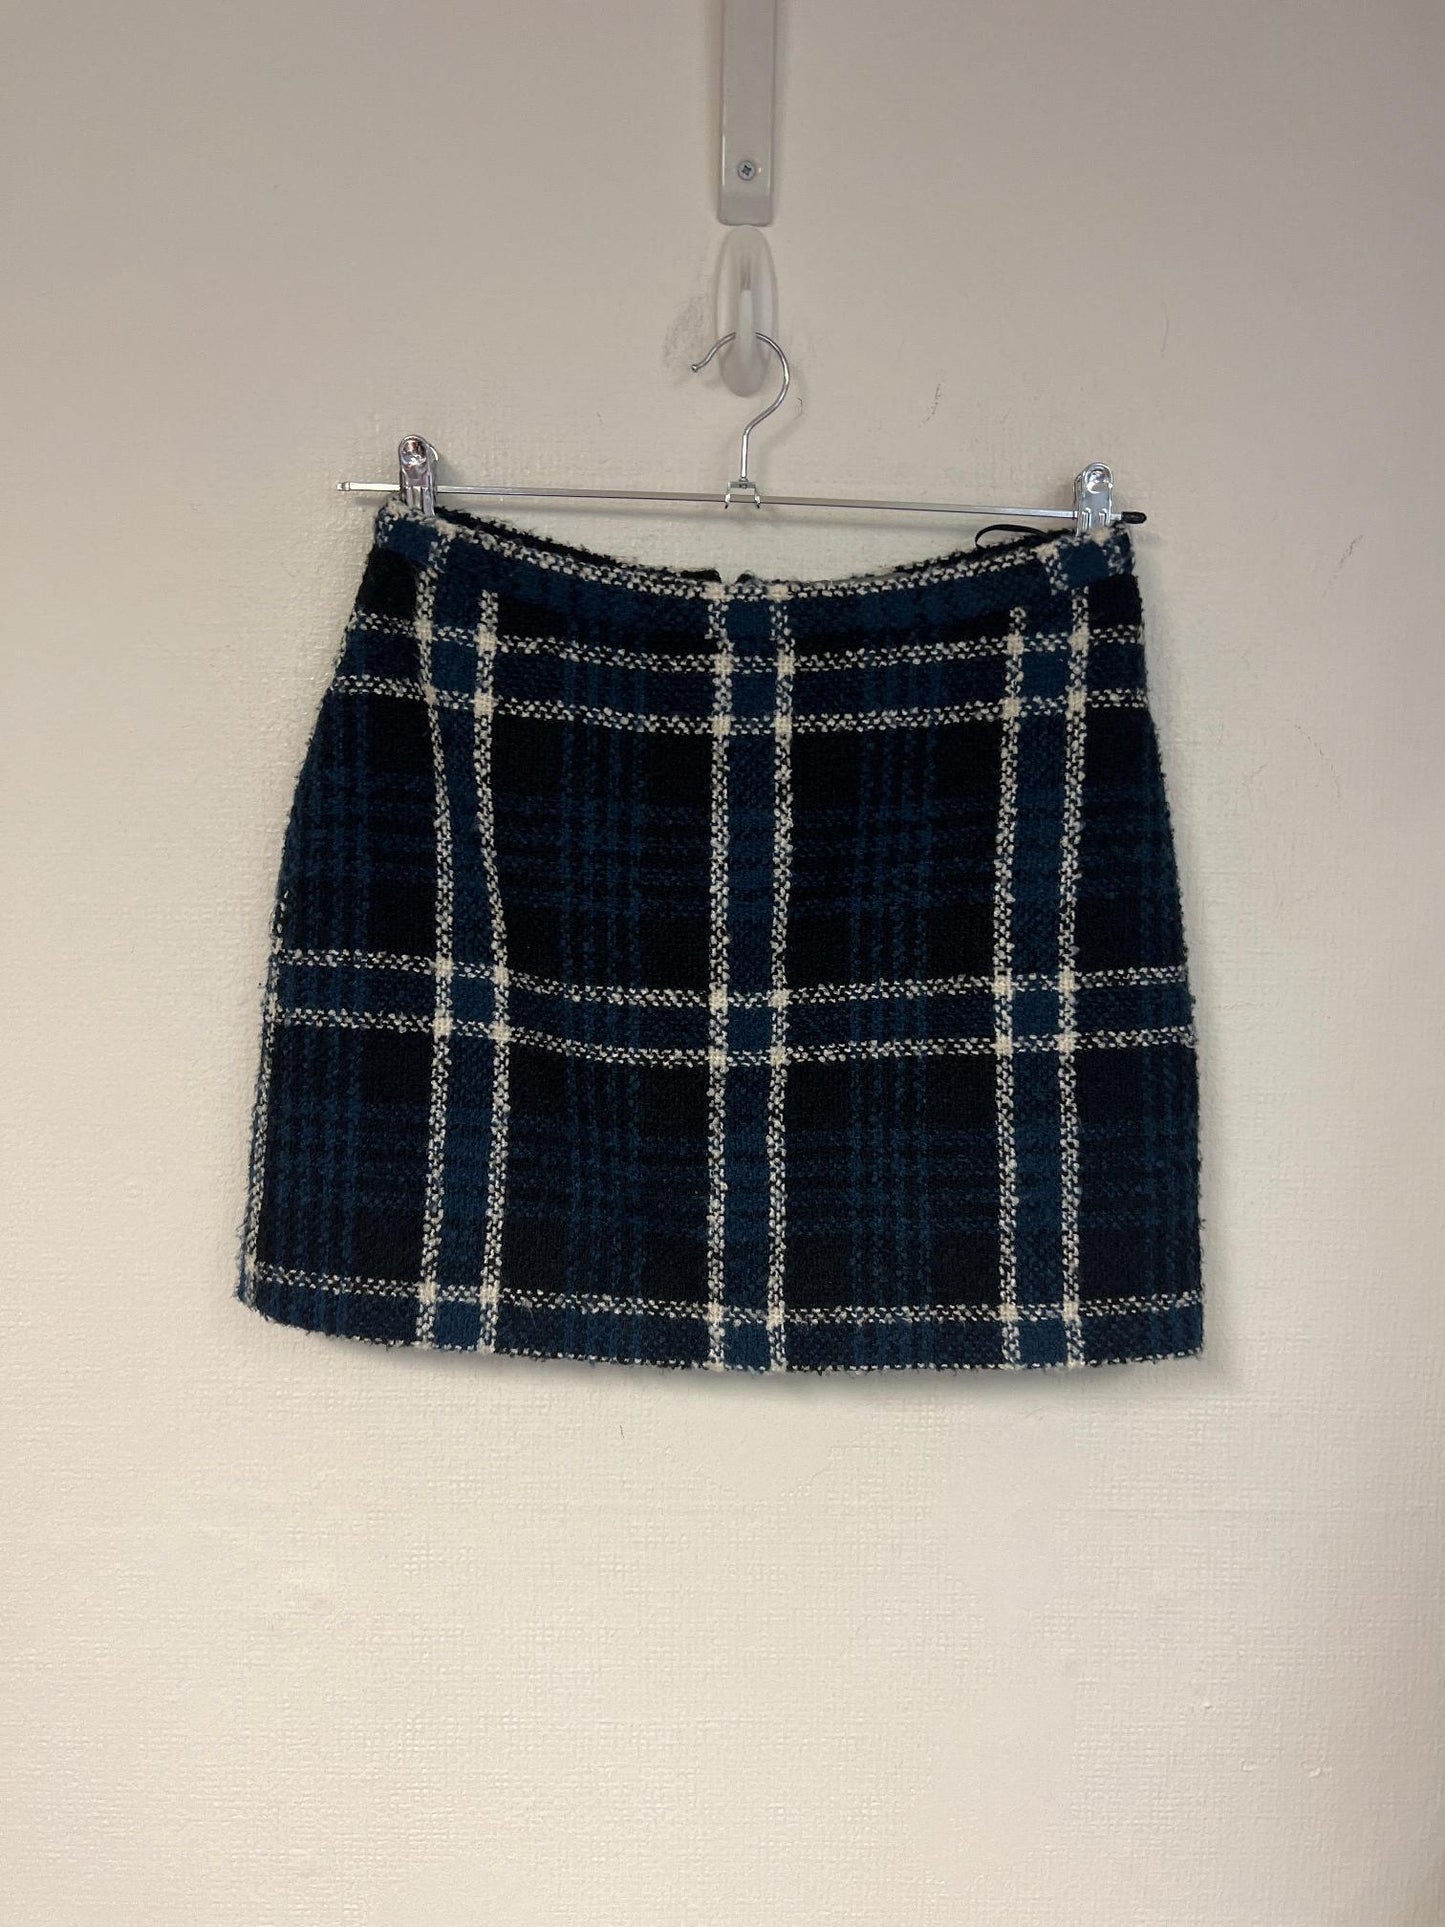 Blue & black madras patterned mini skirt, Oasis, Size 10